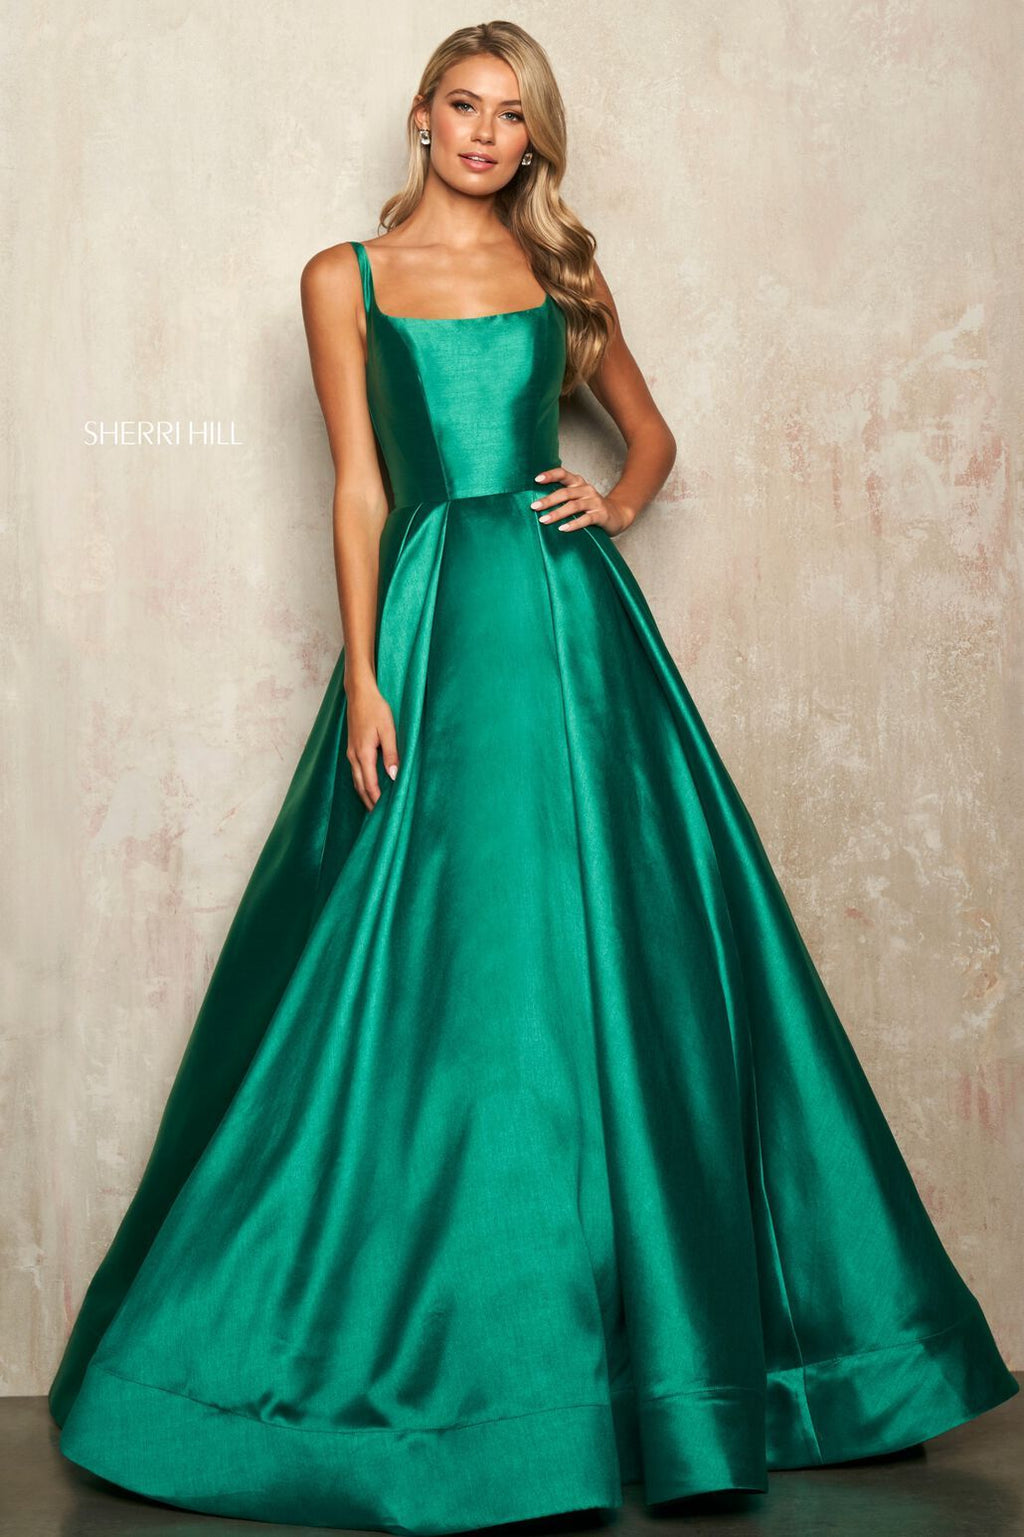 Sherri Hill 54180 emerald prom dresses image.